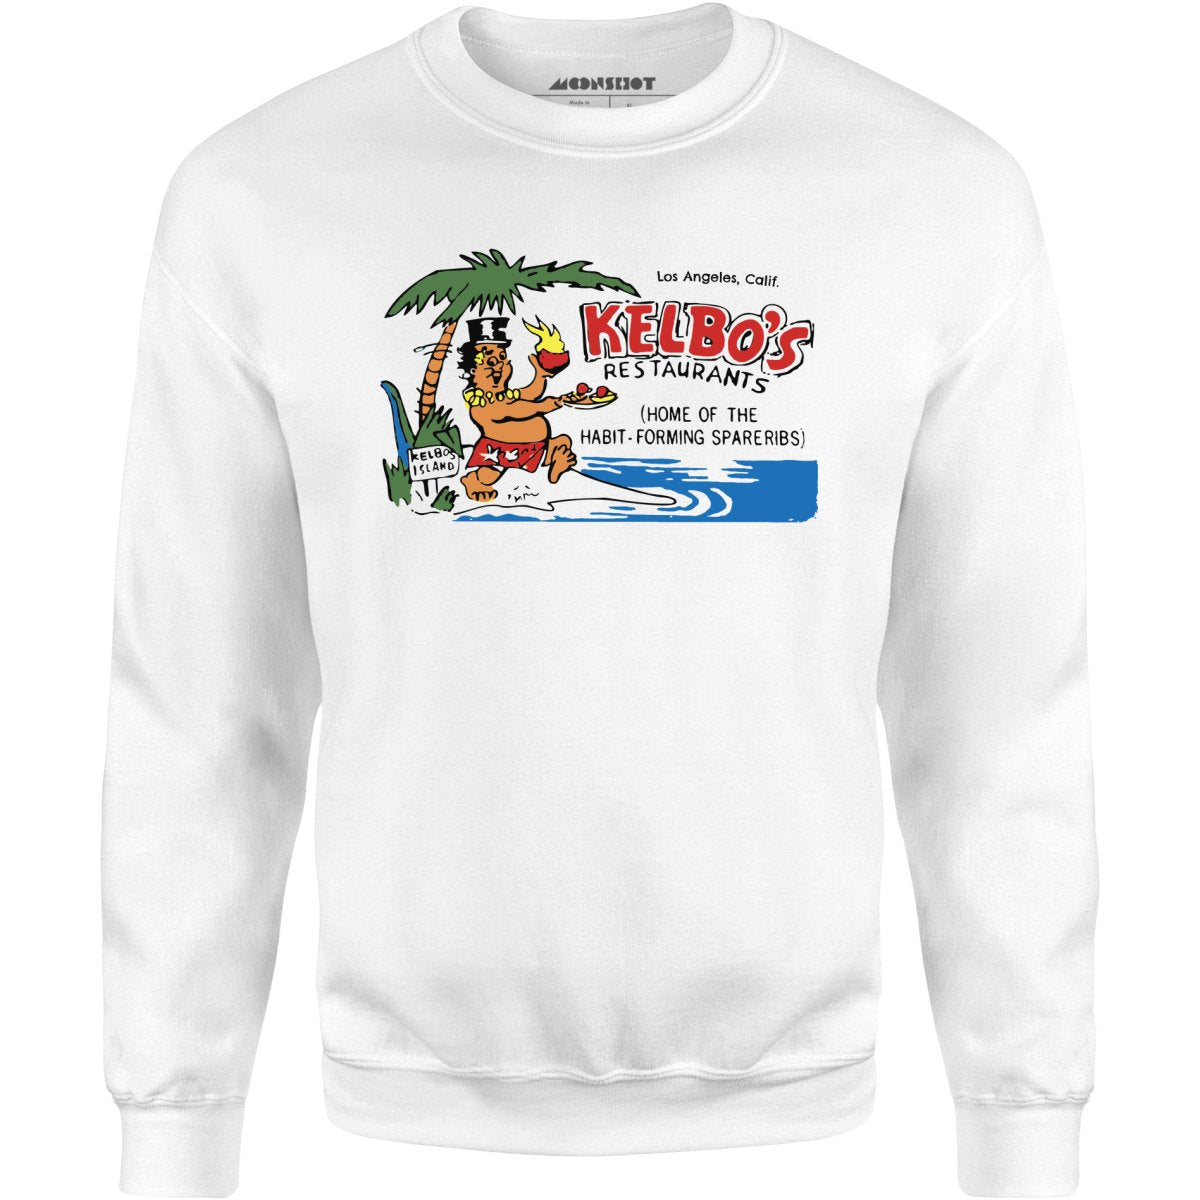 Kelbo's v2 - Los Angeles, CA - Vintage Tiki Bar - Unisex Sweatshirt